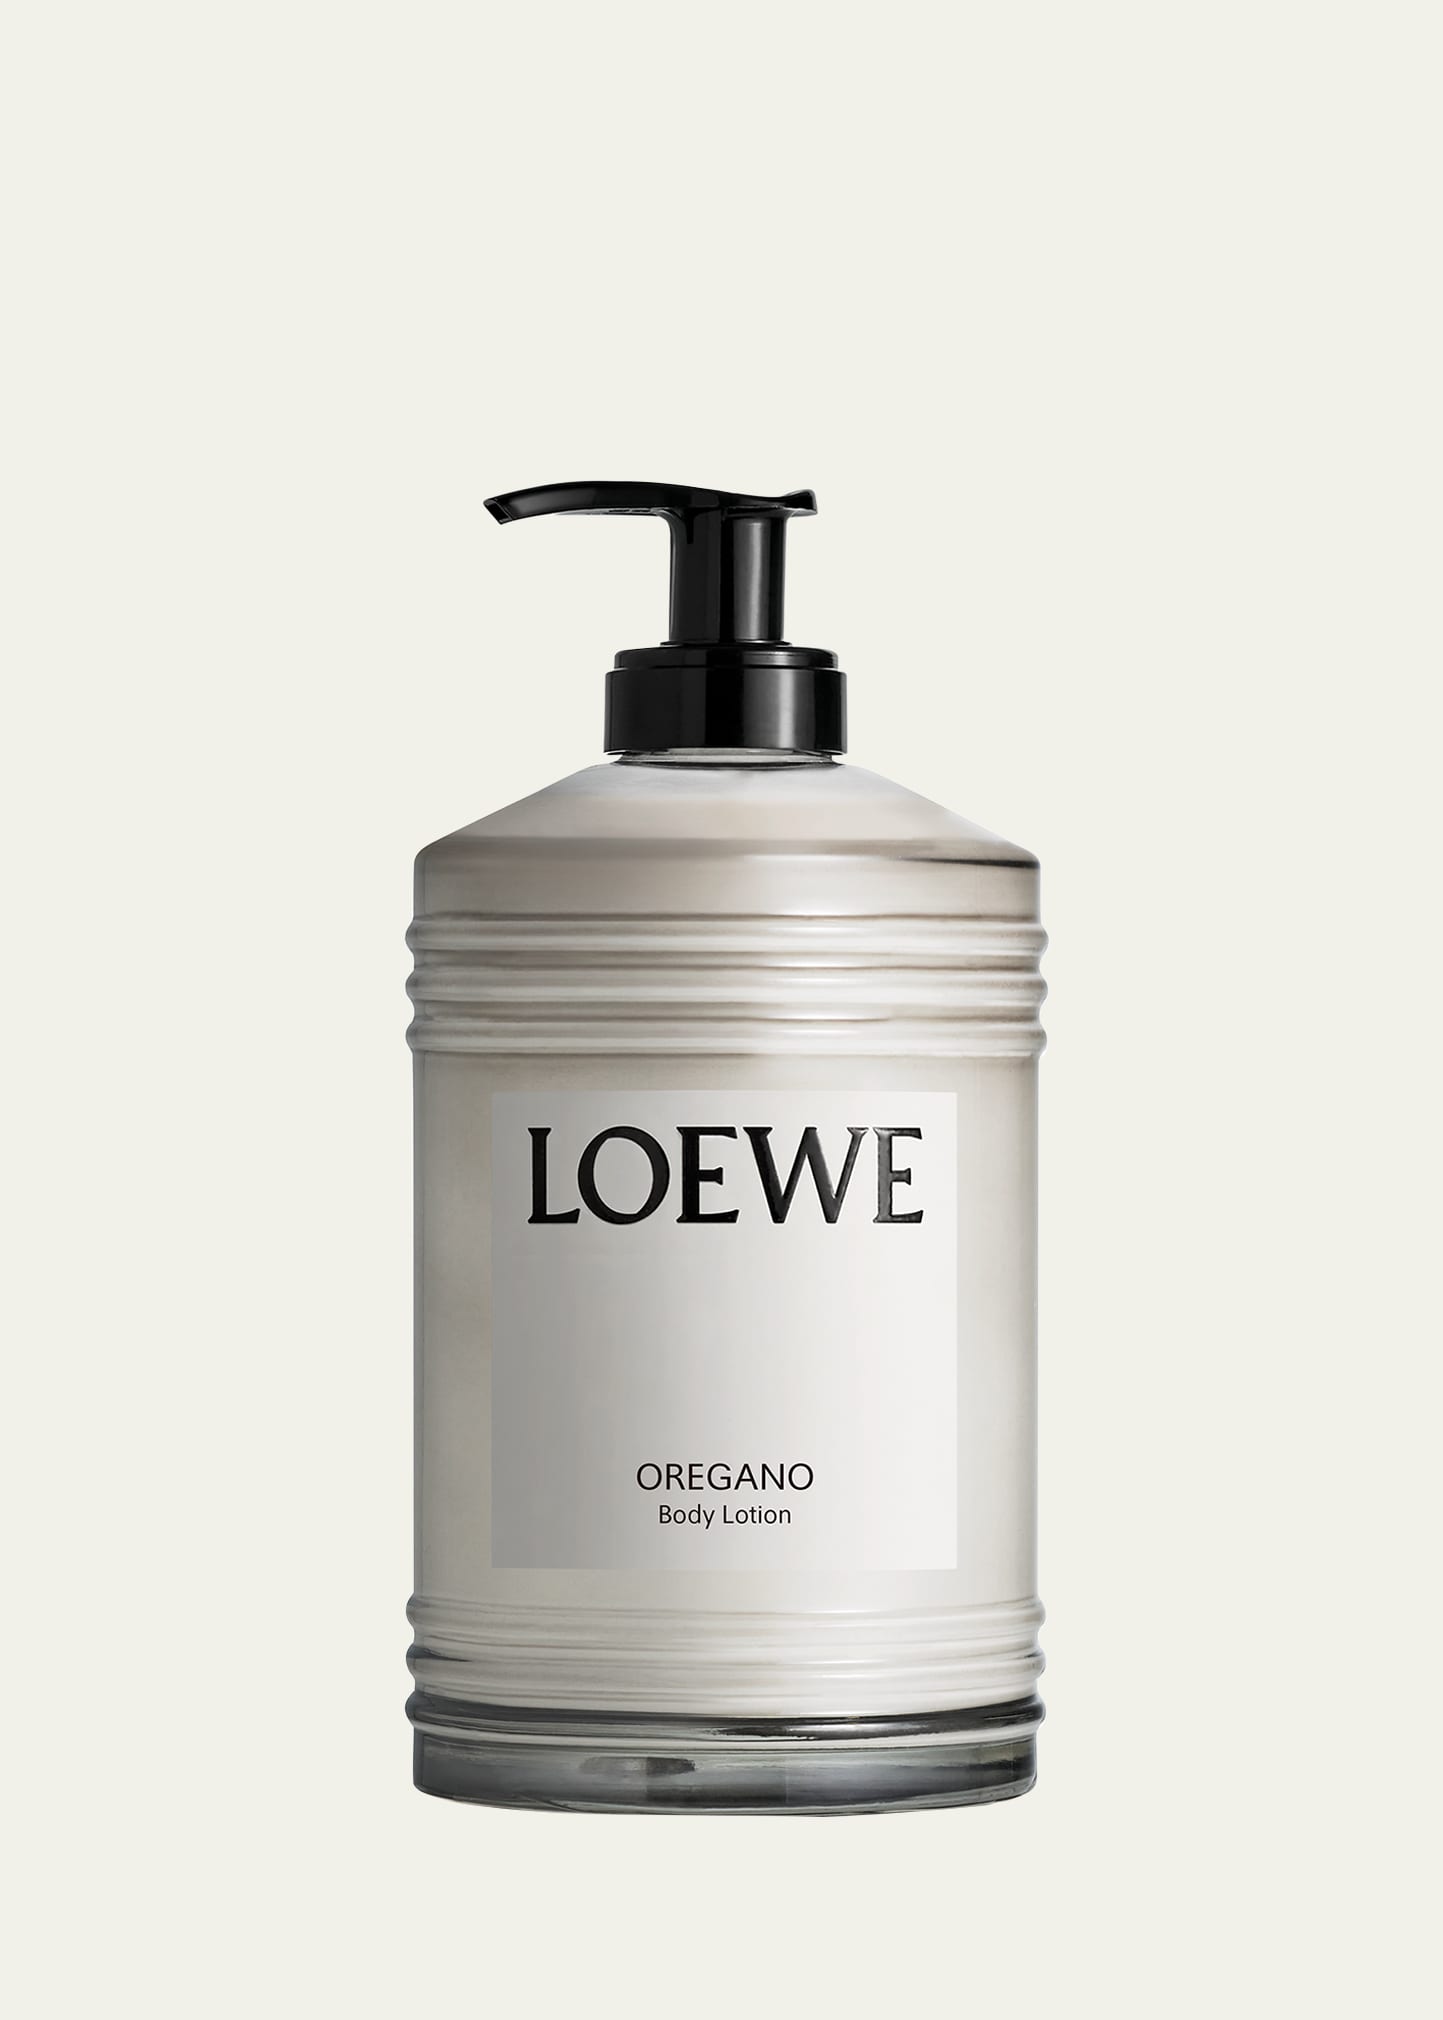 Loewe Oregano Body Lotion, 12 Oz. In White